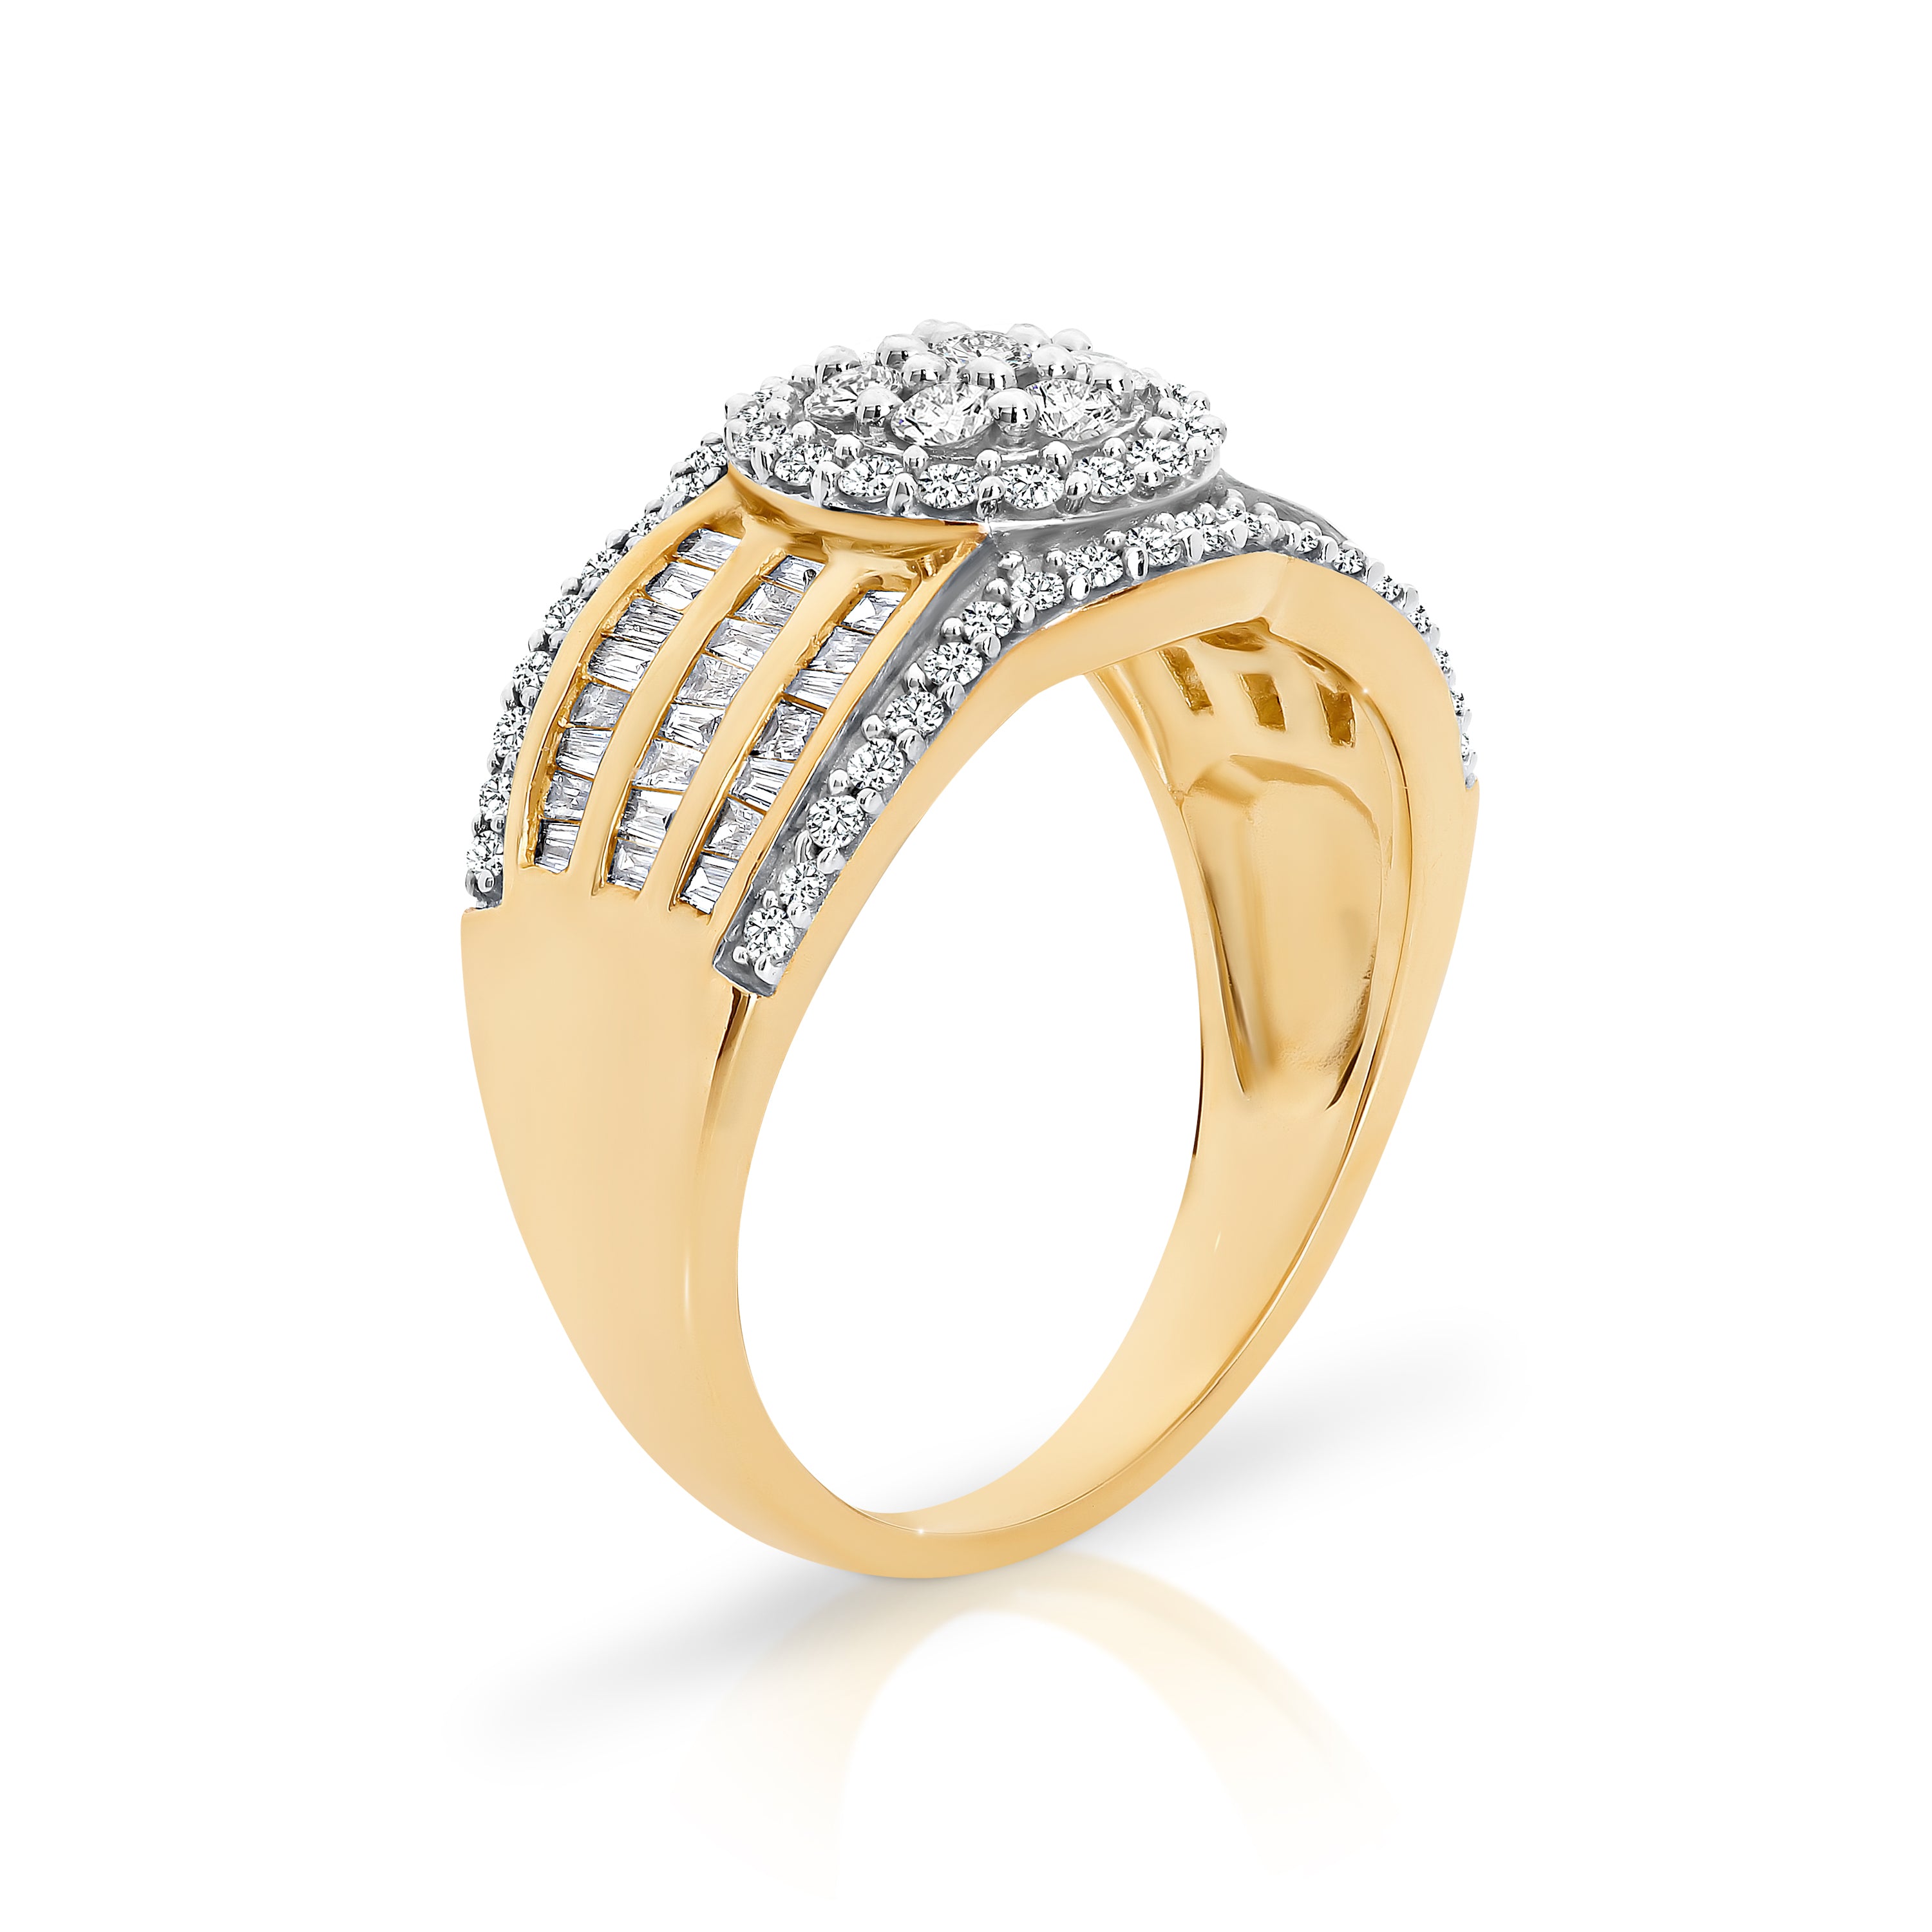 9ct Yellow Gold Diamond Dress Ring 1ct TW